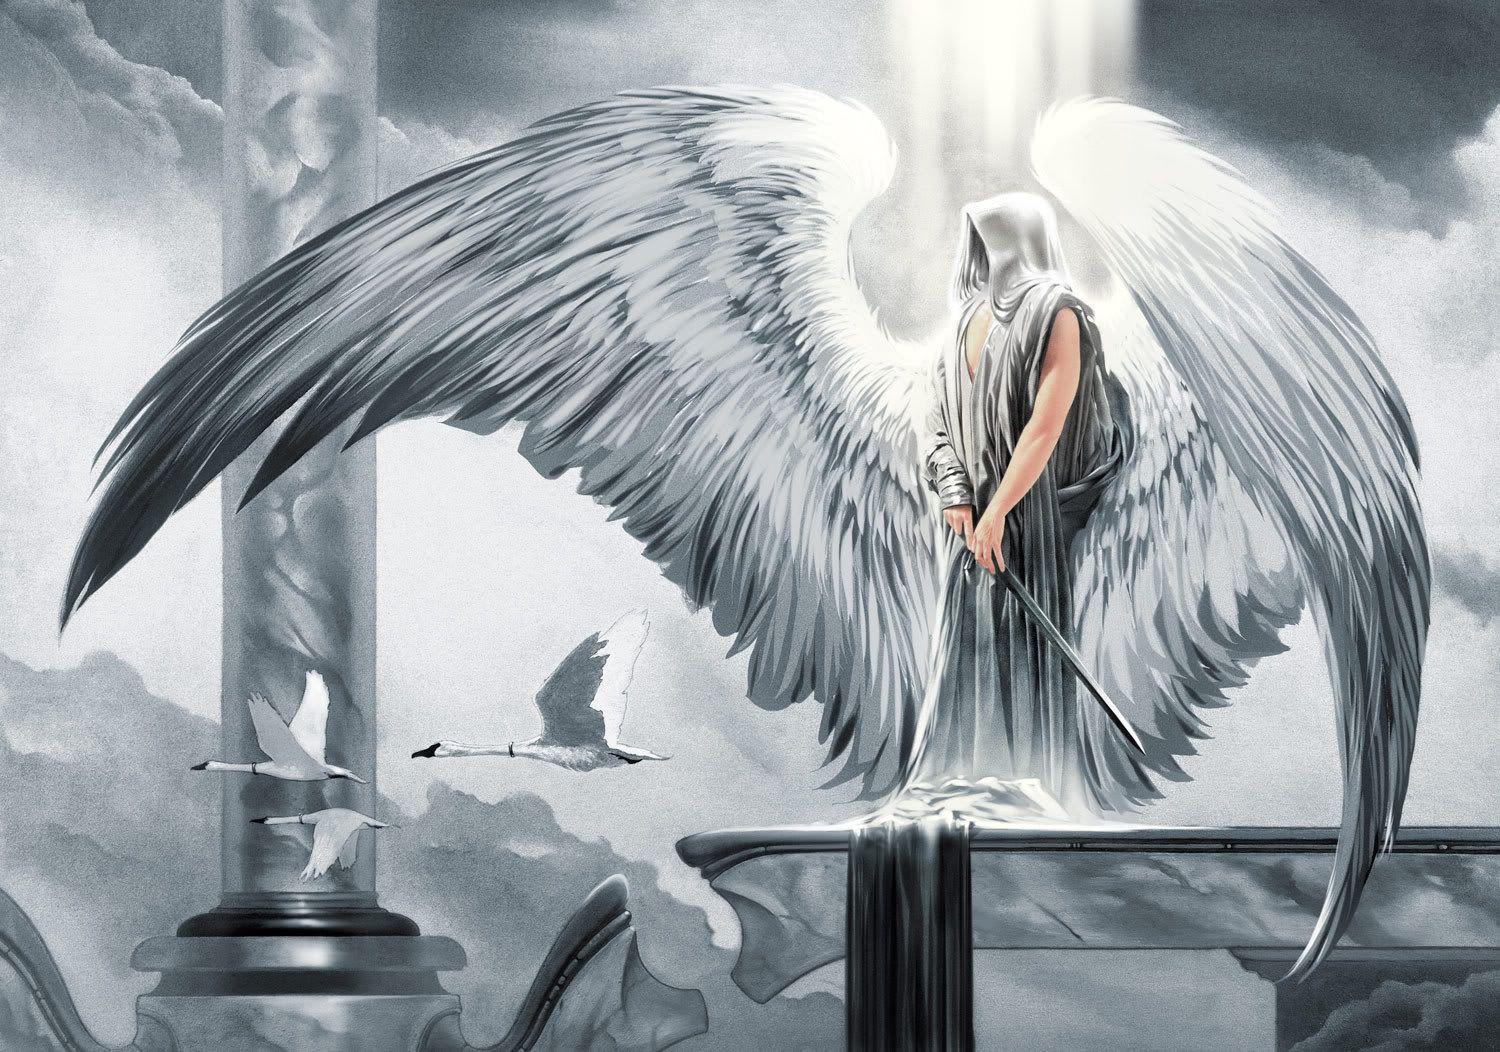 guardian angels wallpaper